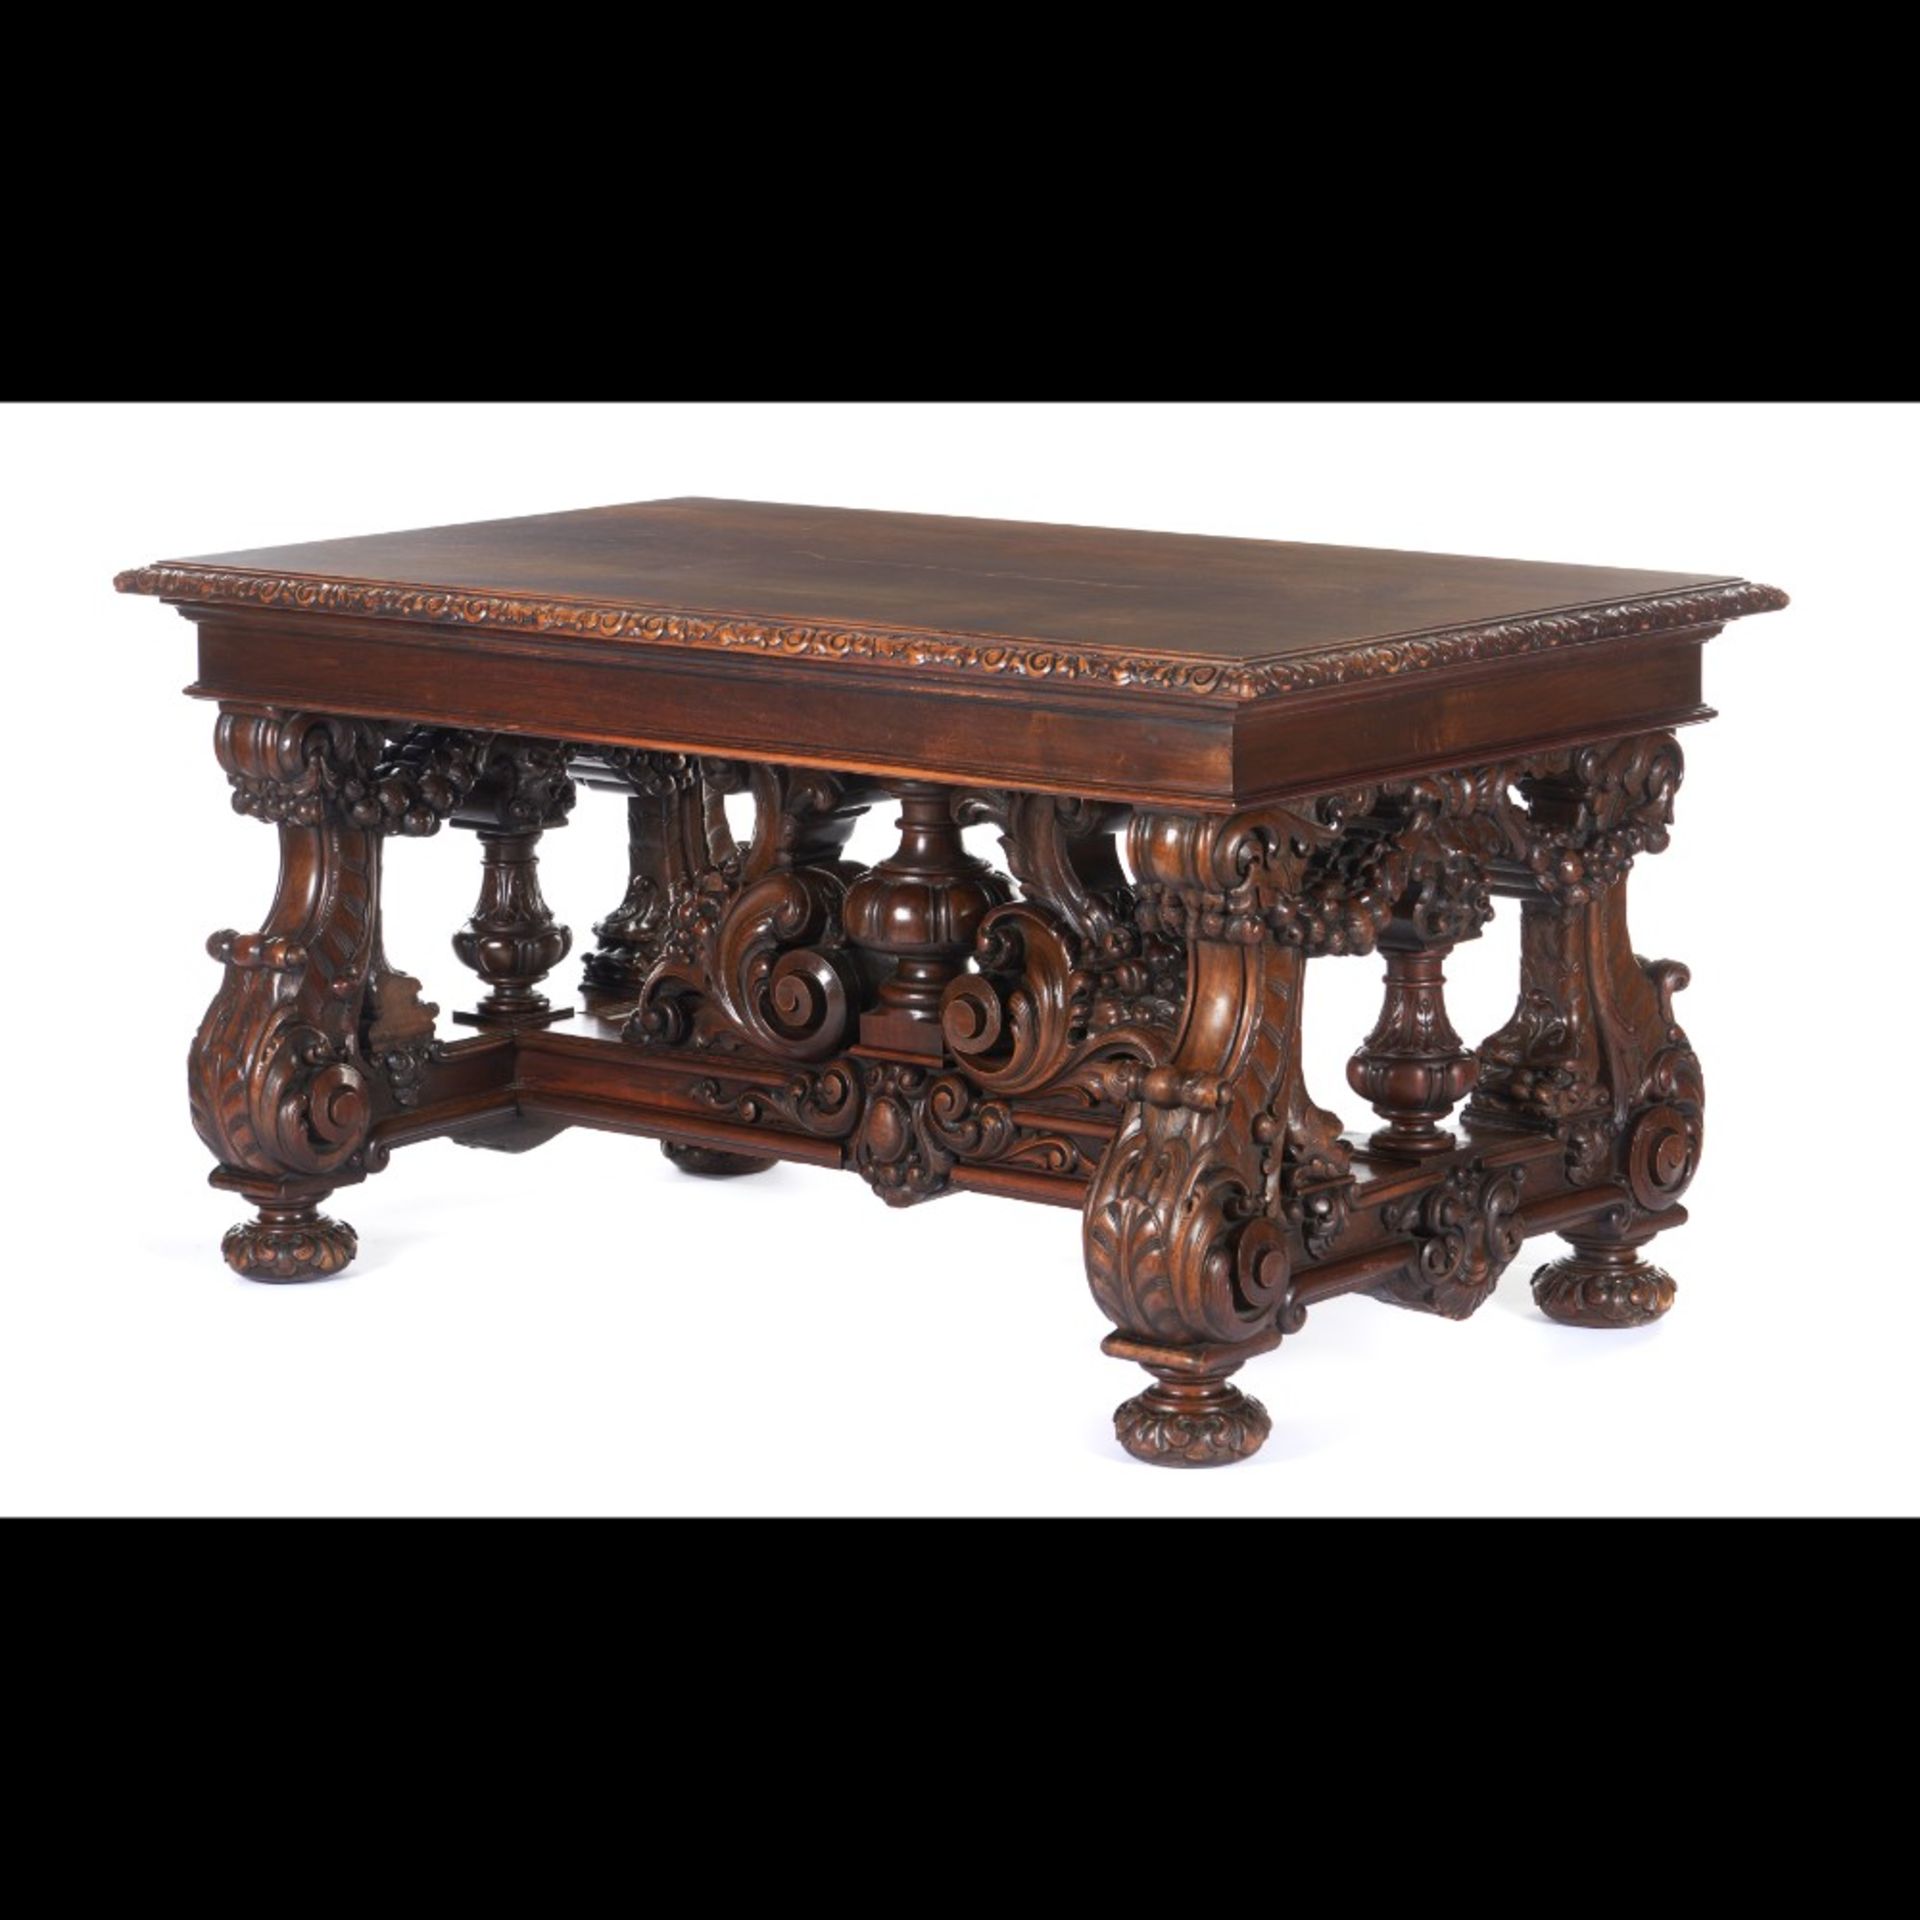  A renaissance table